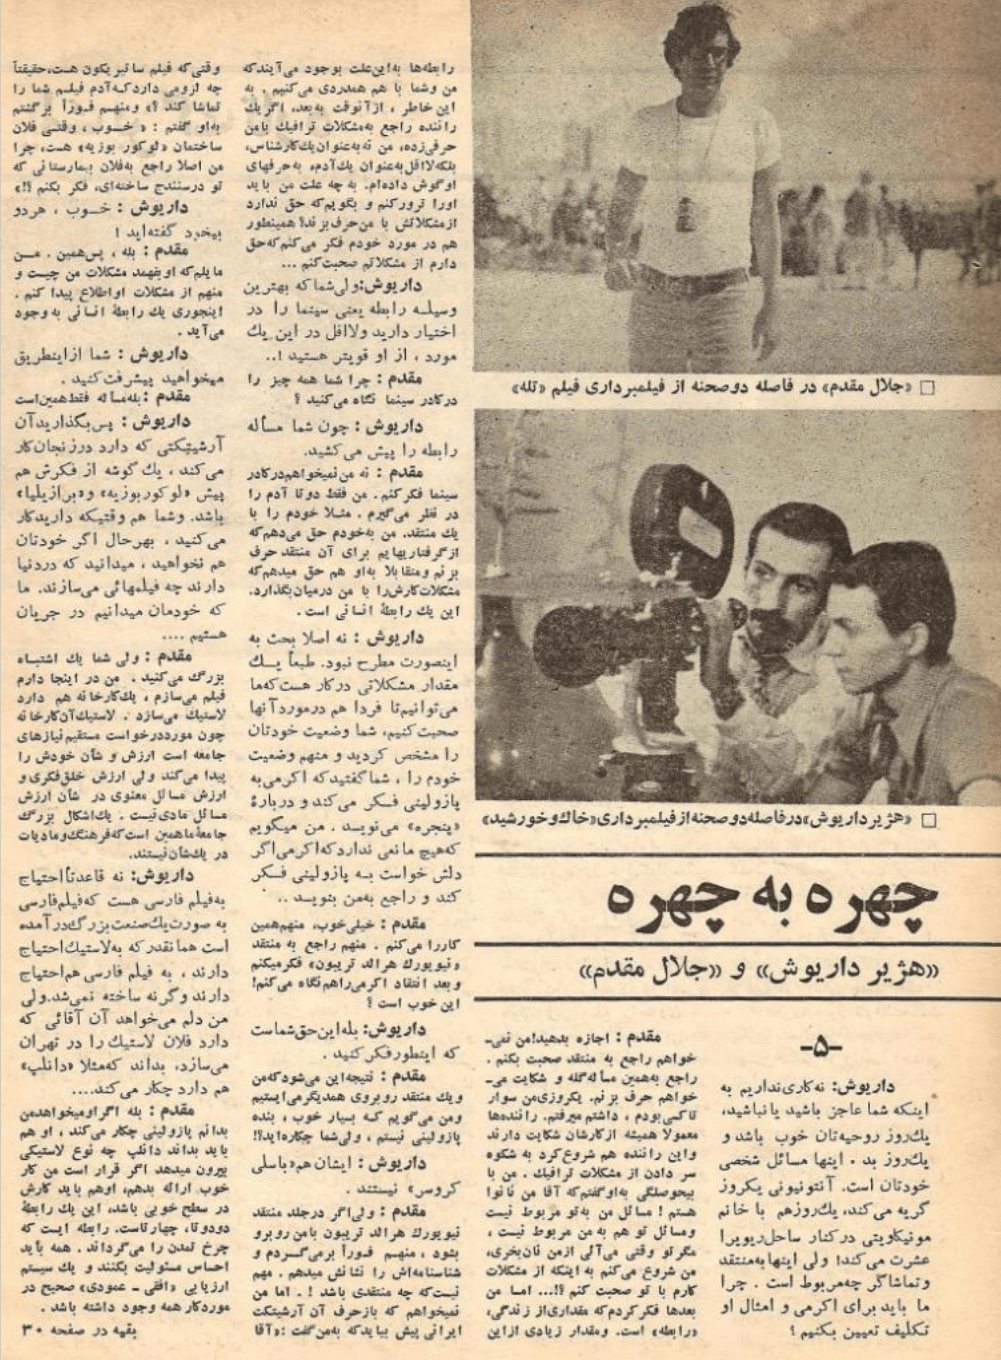 Cinema Star (April 29, 1971) - KHAJISTAN™